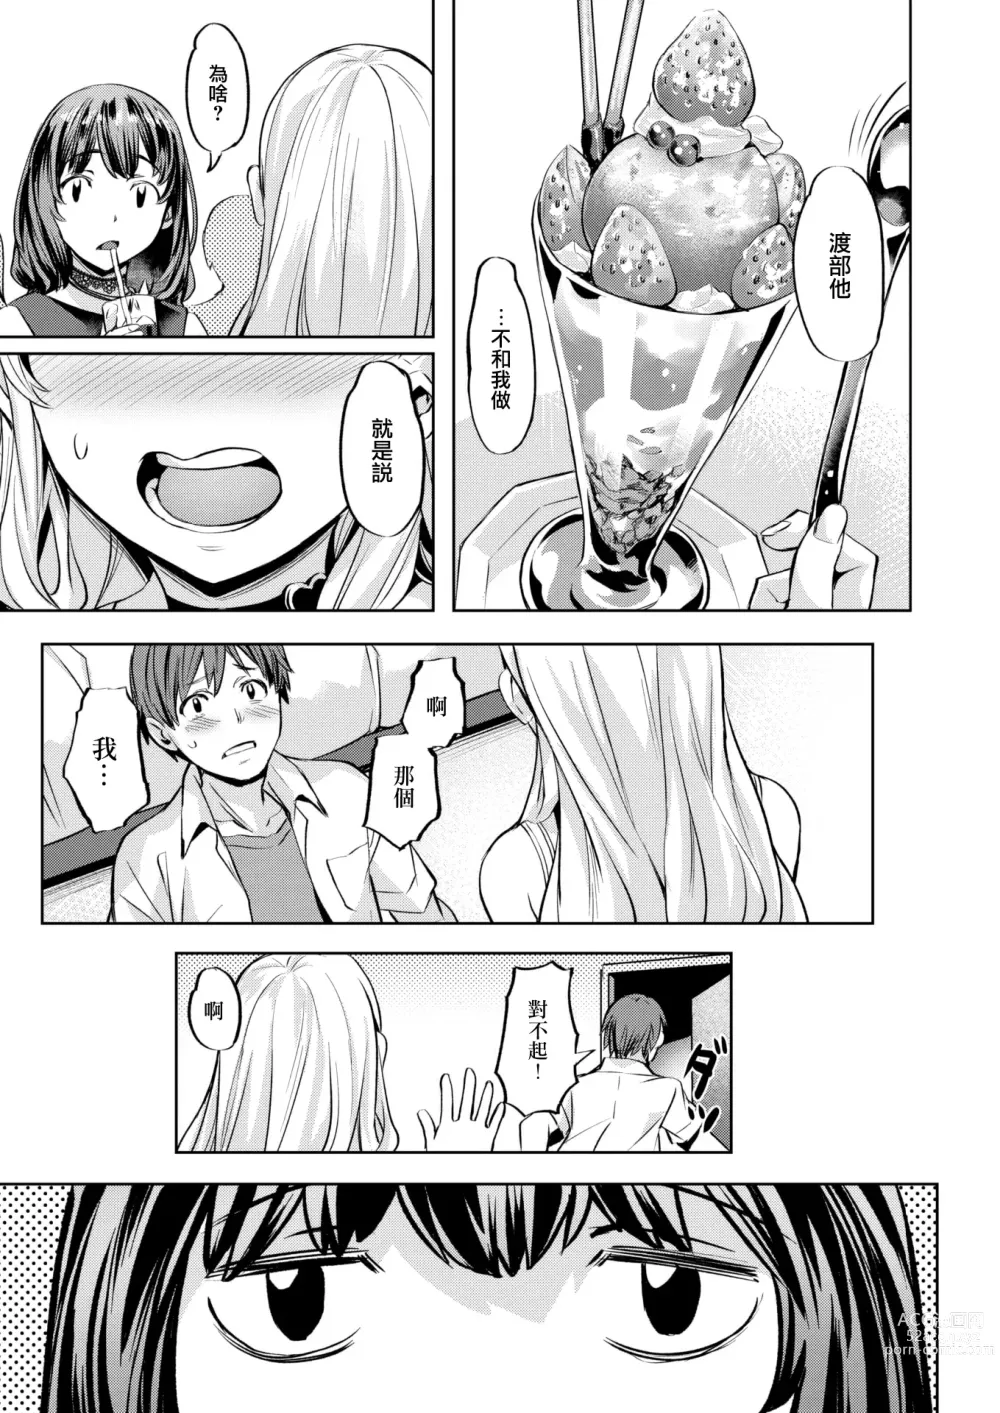 Page 5 of manga Komari Step -step2-